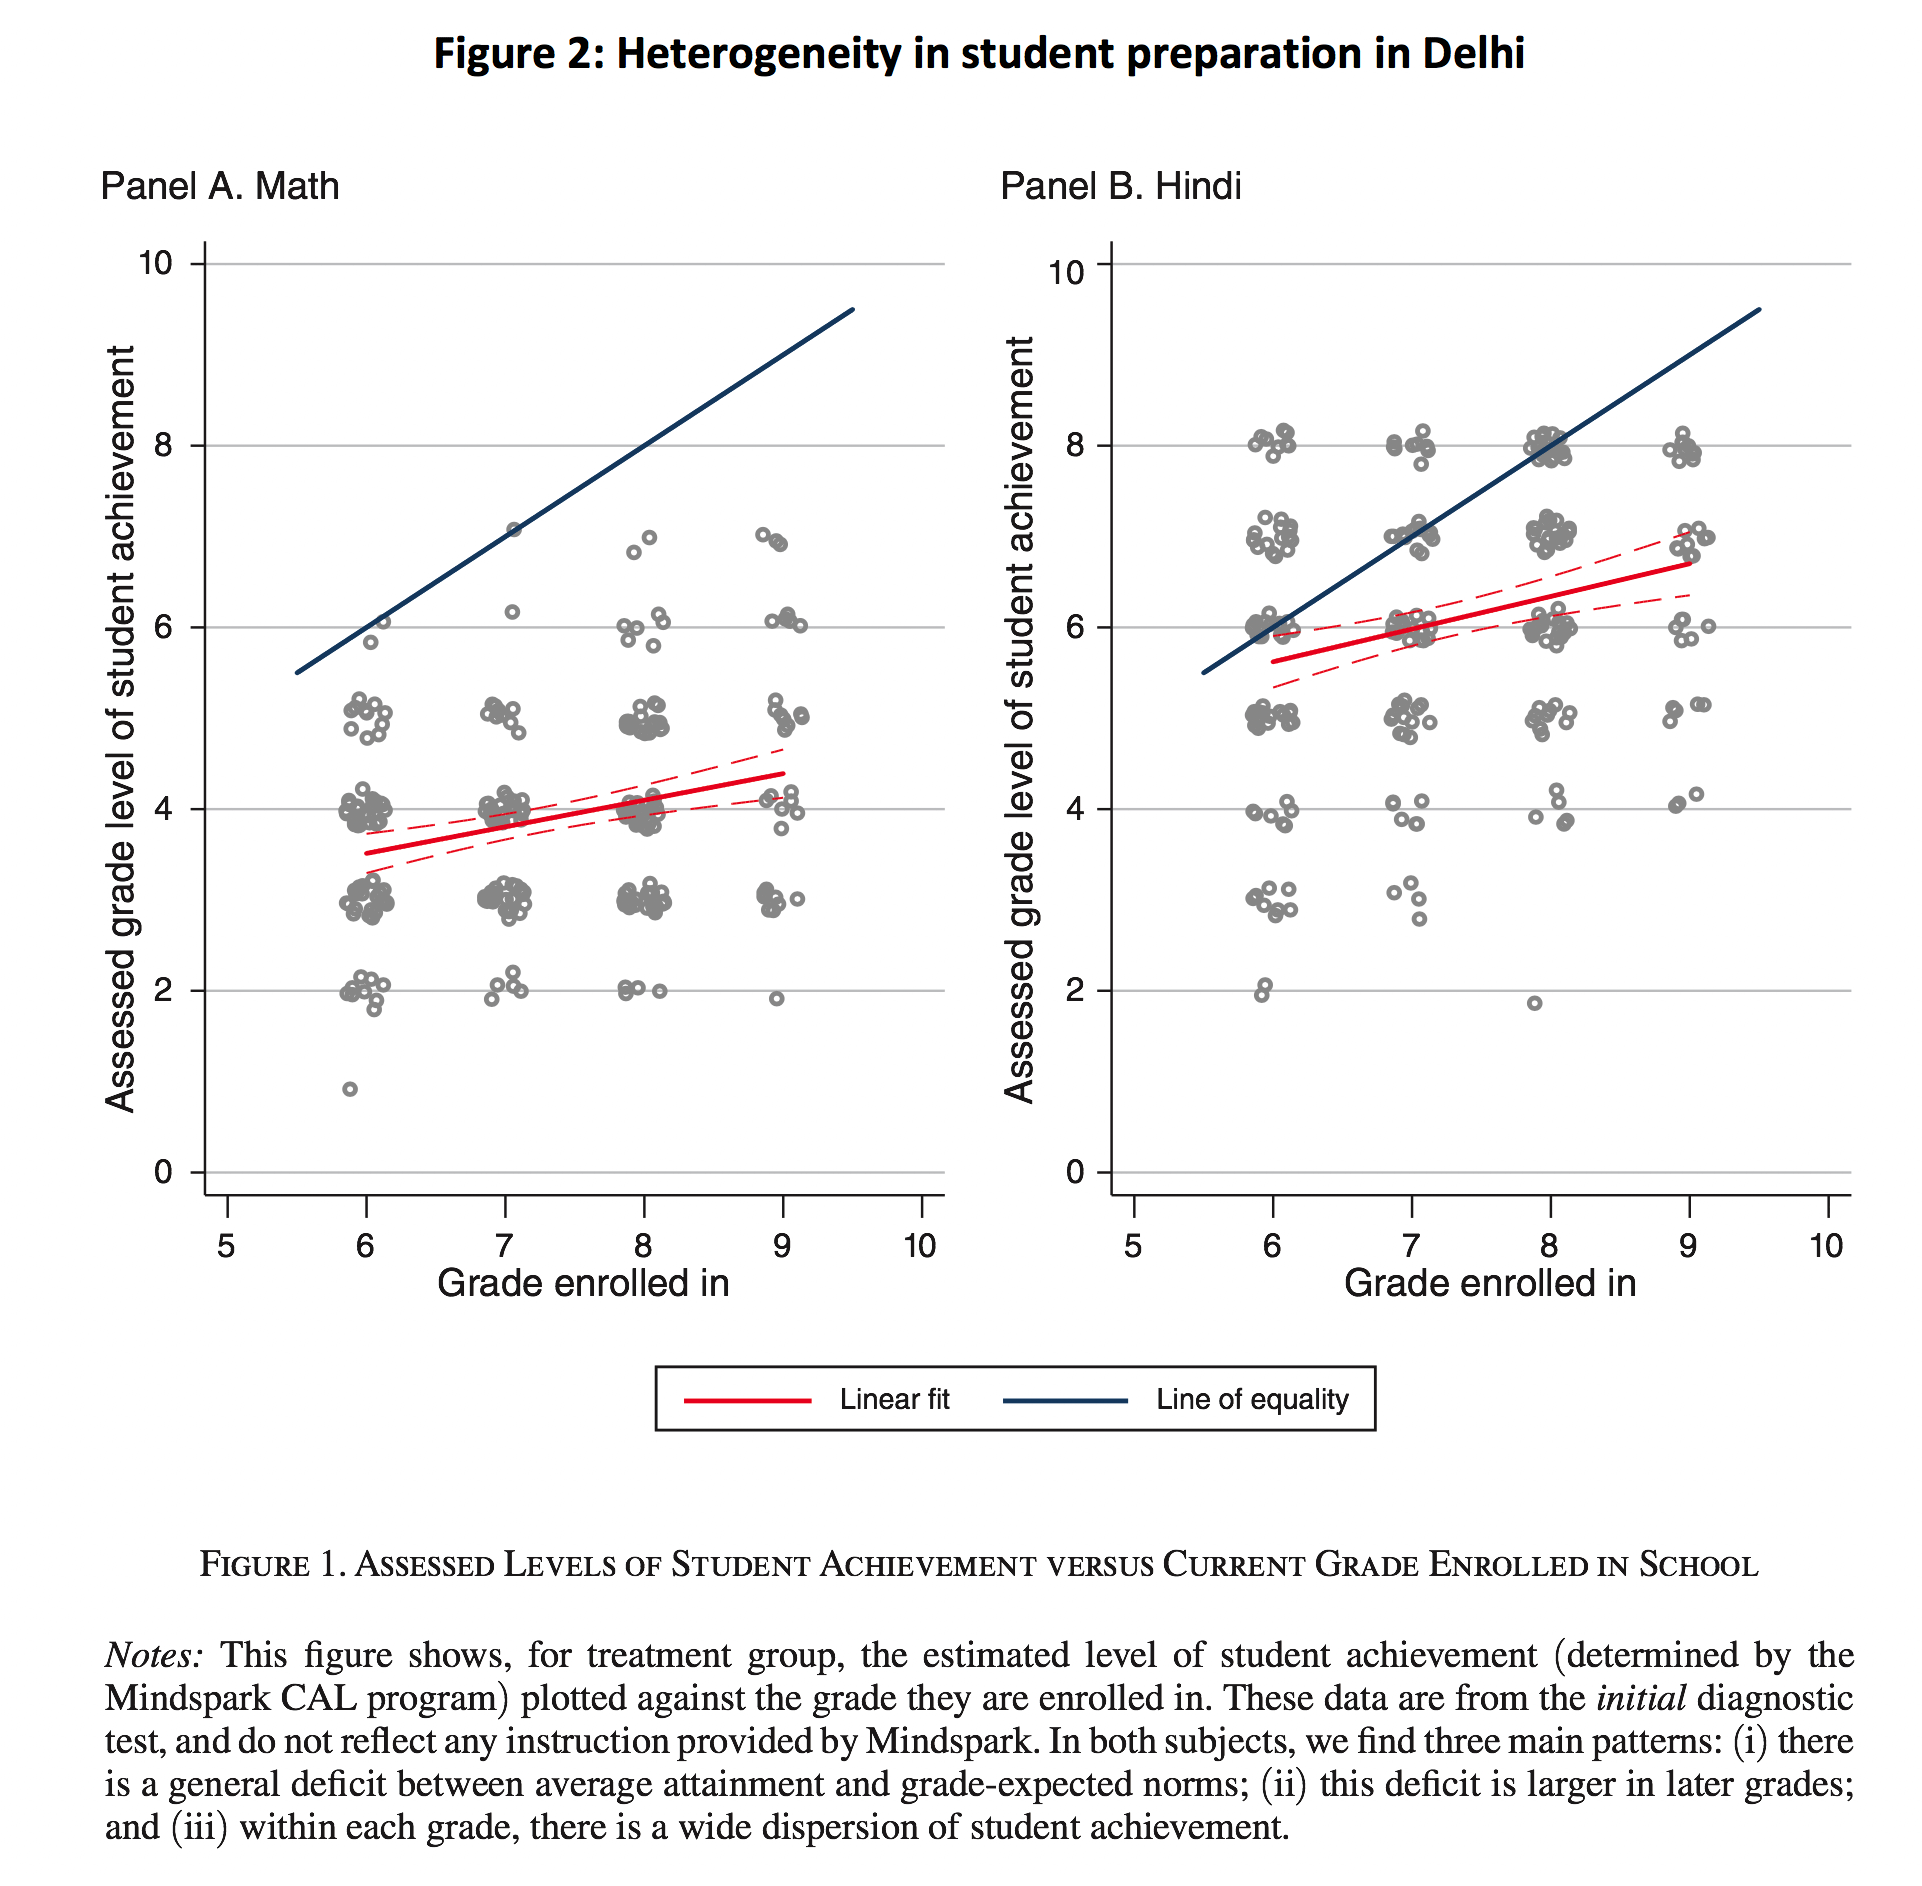 line chart showing the heterogeneity in student preparation in Delhi.